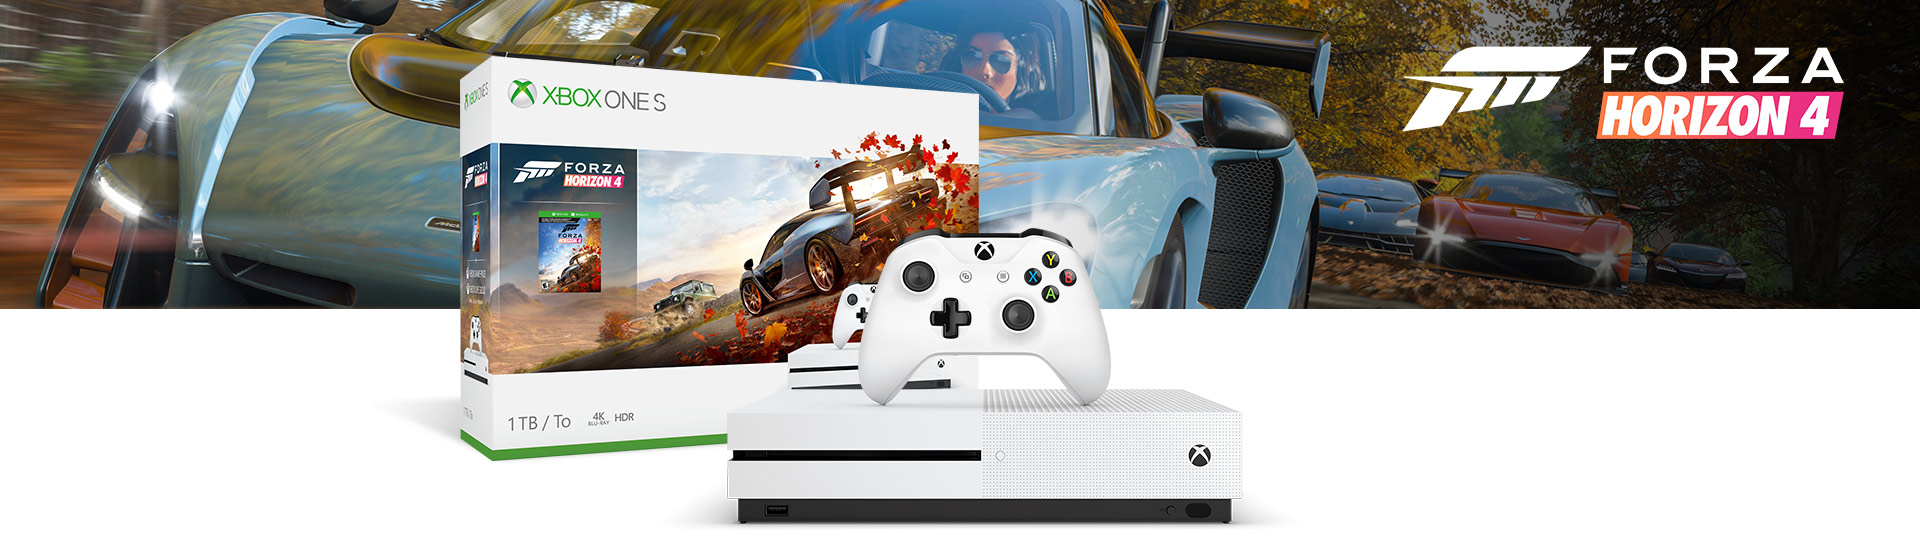 Xbox One S 1 TB (Forza Horizon 4 同梱版)